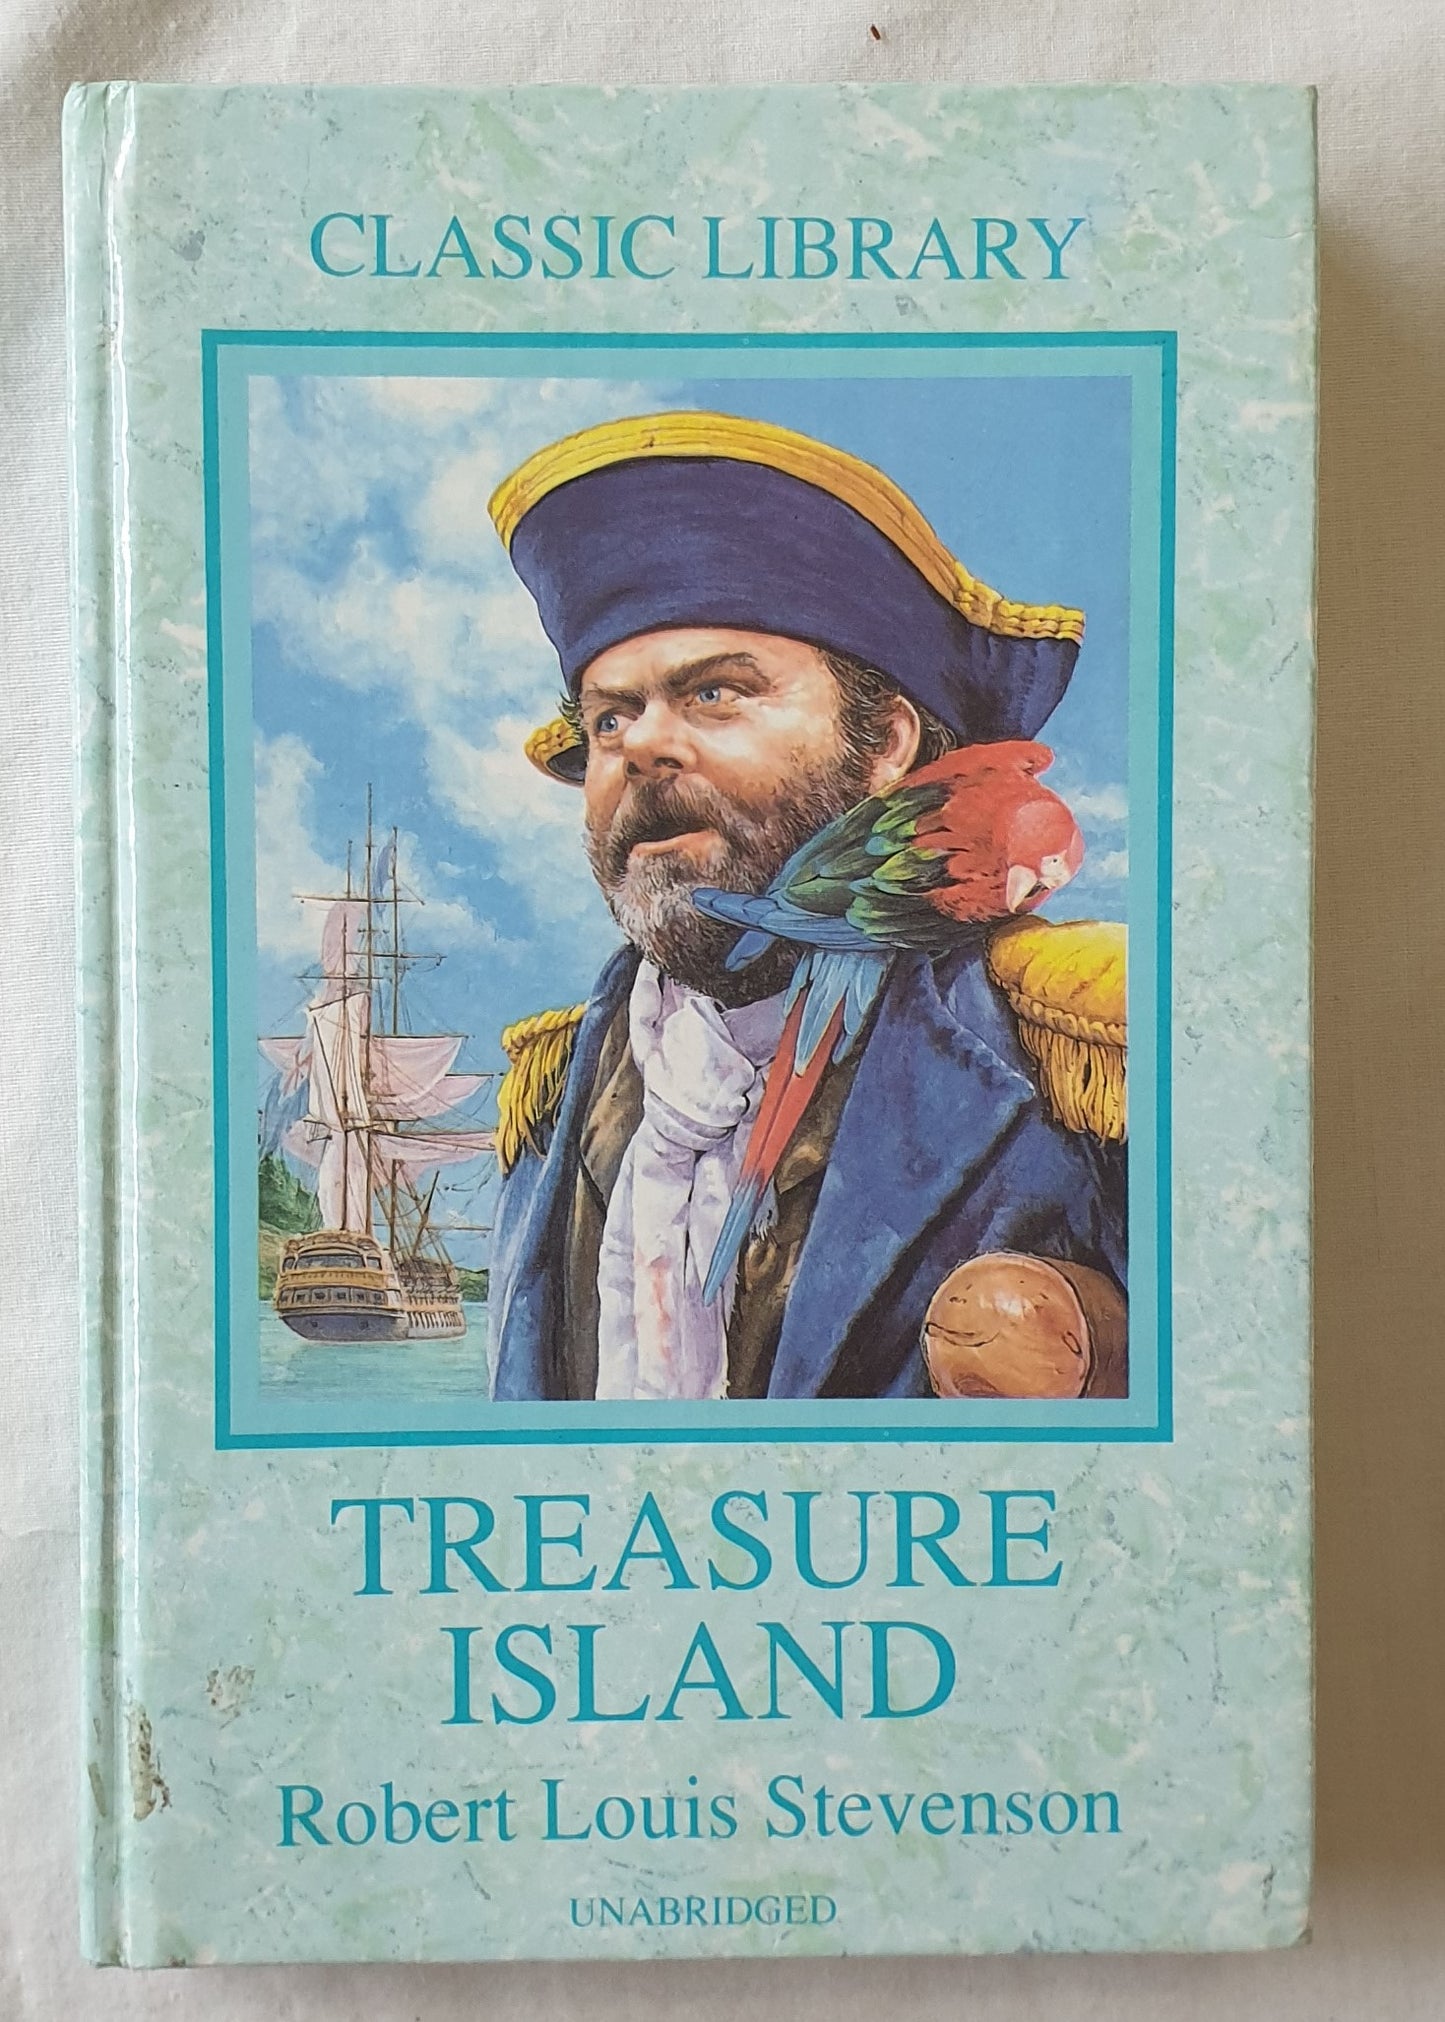 Treasure Island (unabridged)  by Robert Louis Stevenson